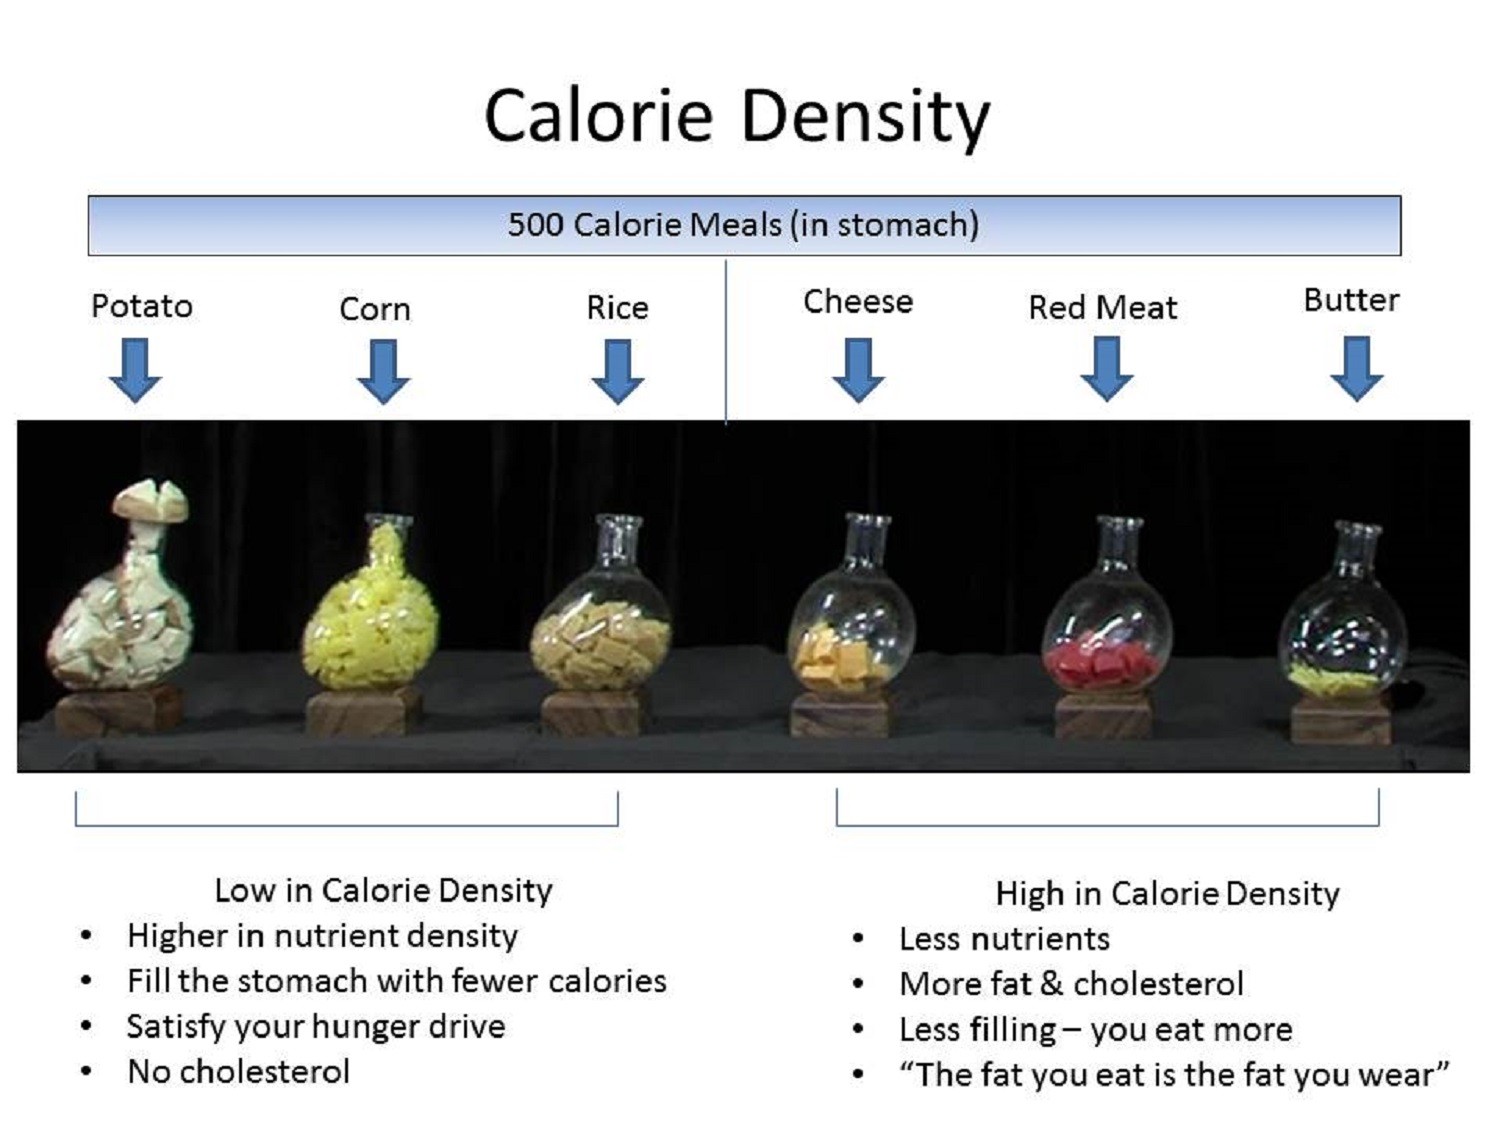 Calorie-Density-Image-2.jpg